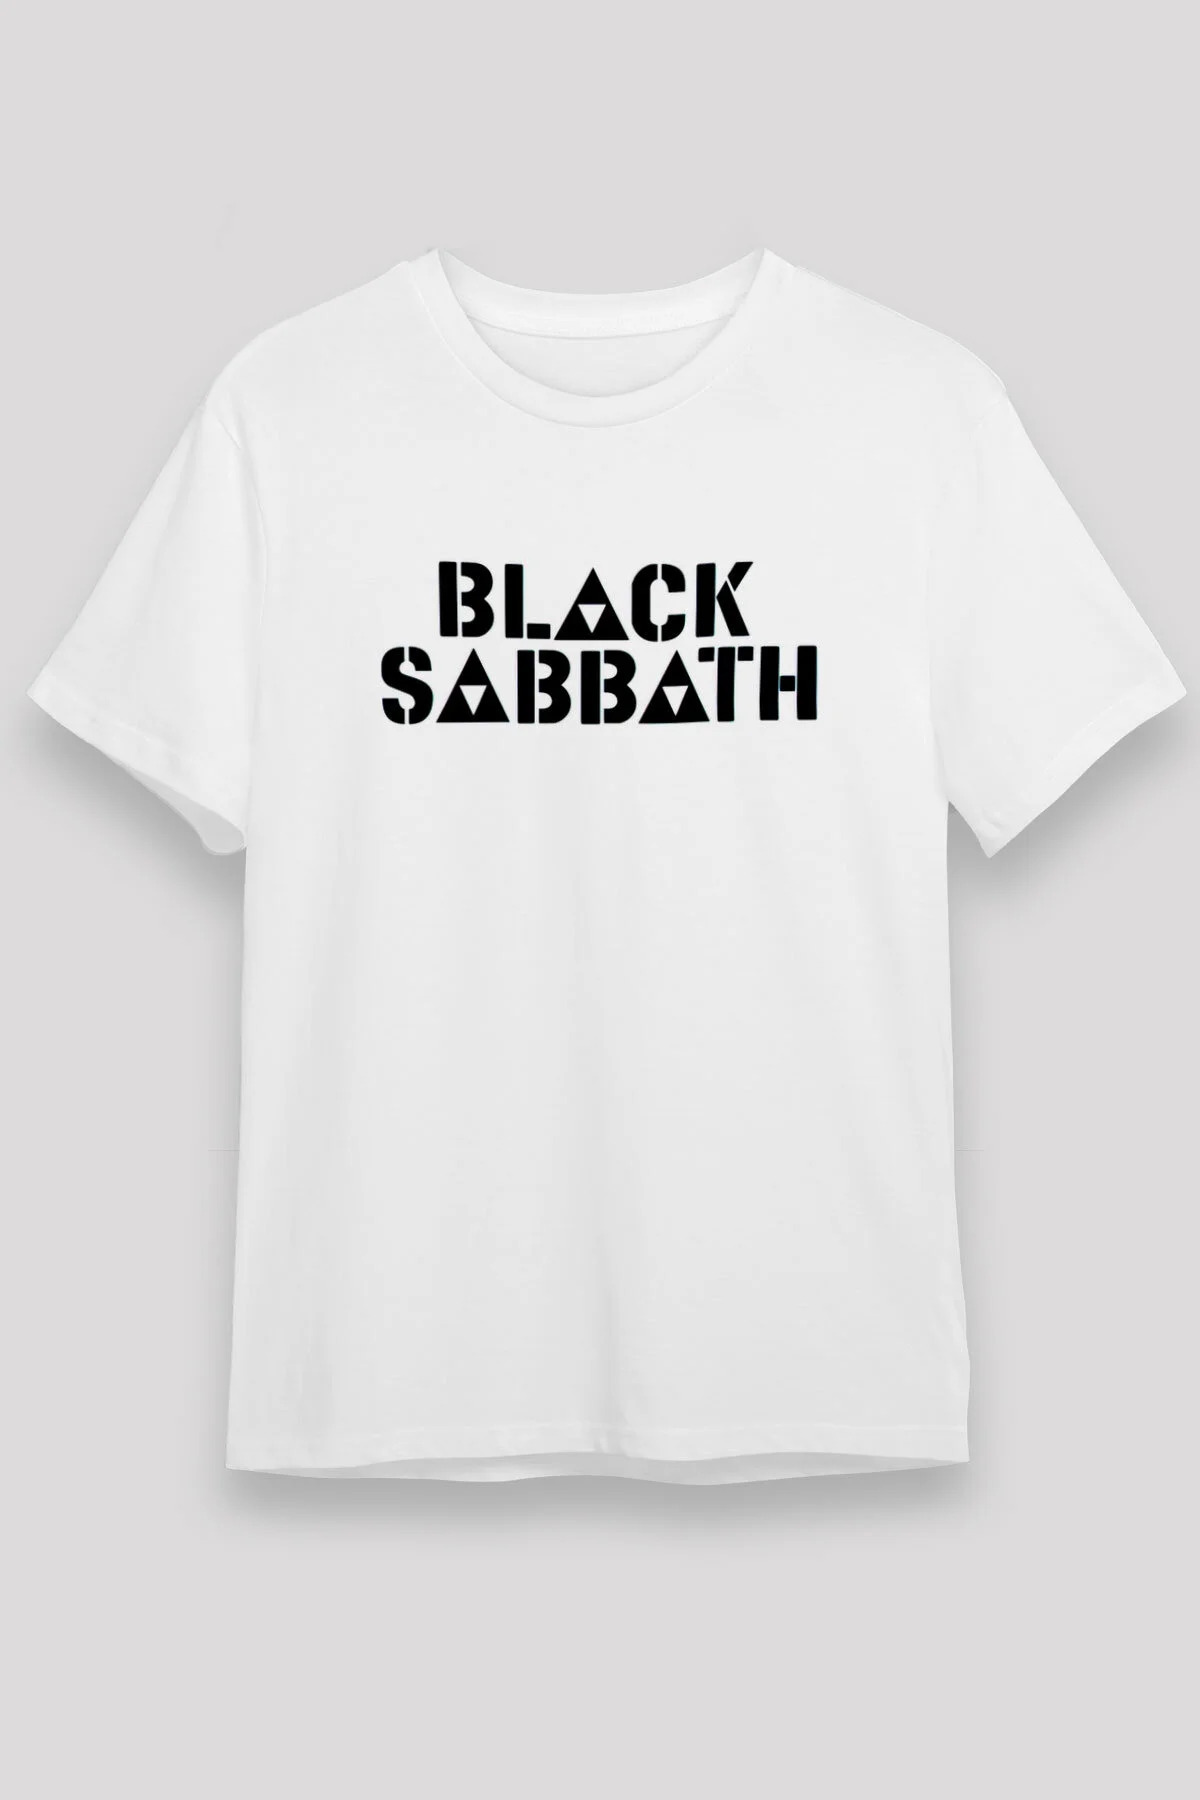 Black Sabbath ,Rock Music Band ,Unisex Tshirt 47/